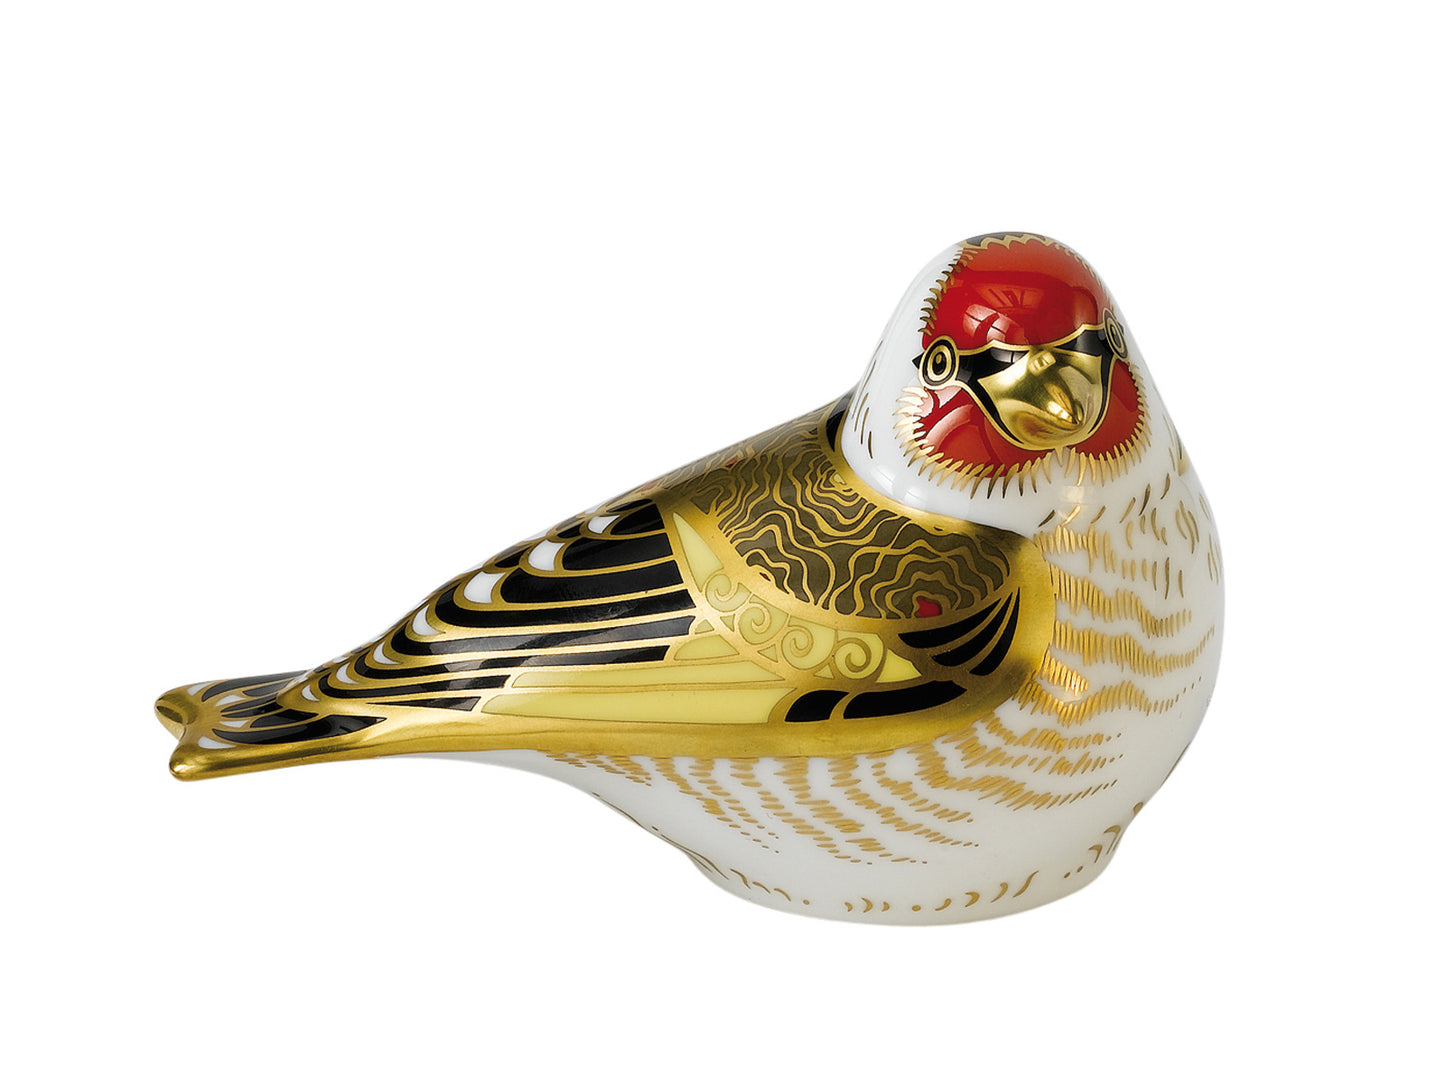 Royal Crown Derby Goldfinch